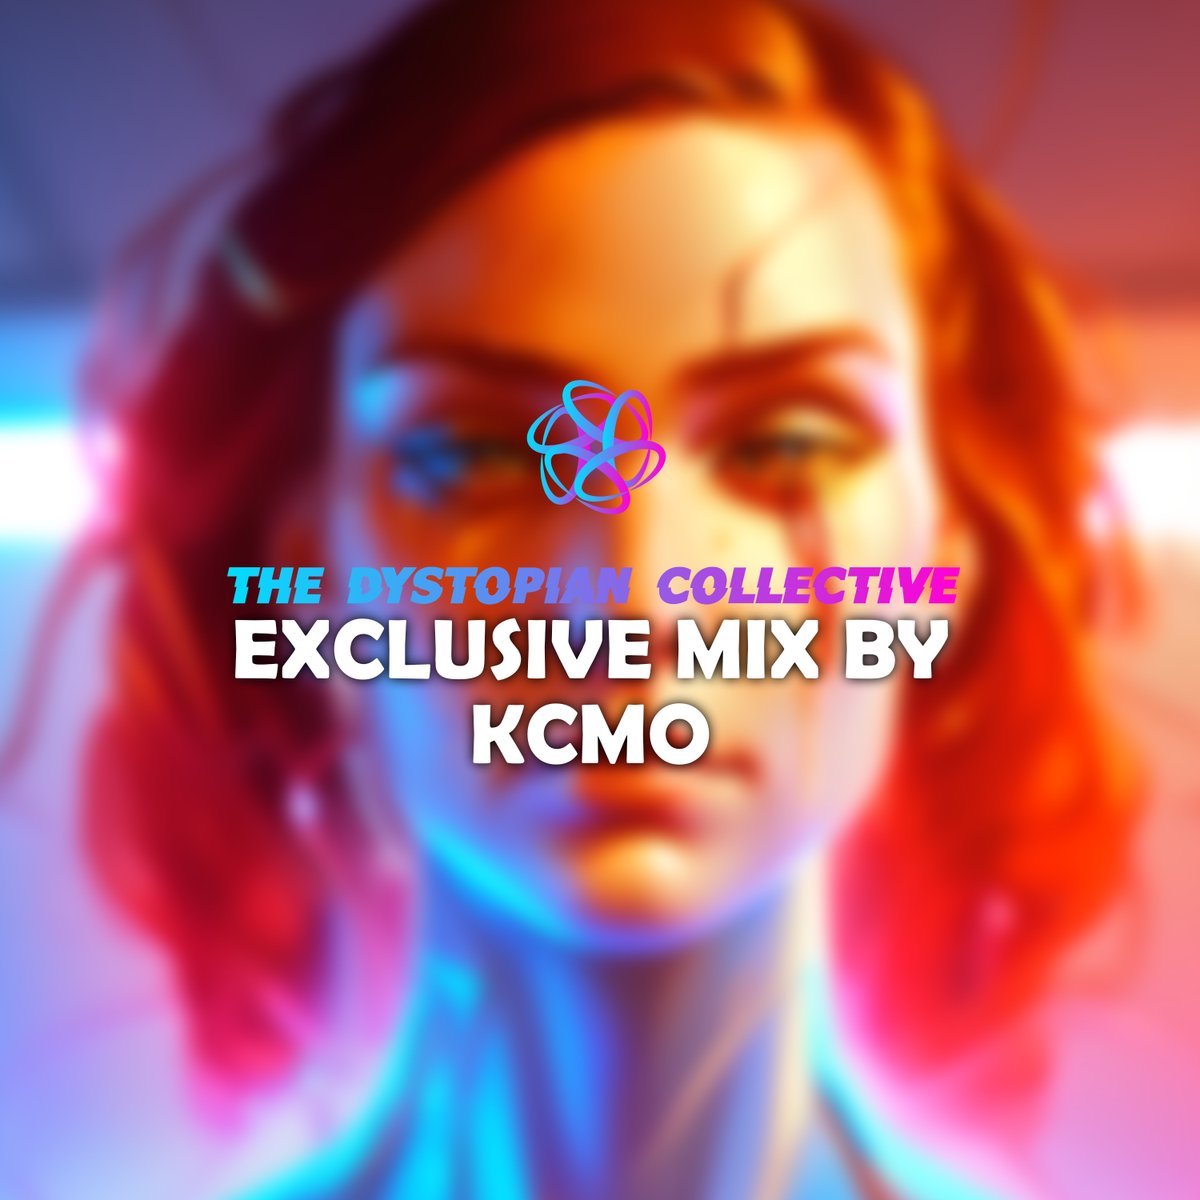 Listen to an exlcusive mix by KCMO available on Mixcloud & Sound Cloud now.

Mixcloud: ffm.link/kcmomixmc

Sound Cloud: ffm.link/kcmomixsc

#kcmo #thedystopiancollective #dnb #edm #exclusivemix #dj #radio #SoundCloud #mixcloud #ghettohouse #ghettotech #drumandbass